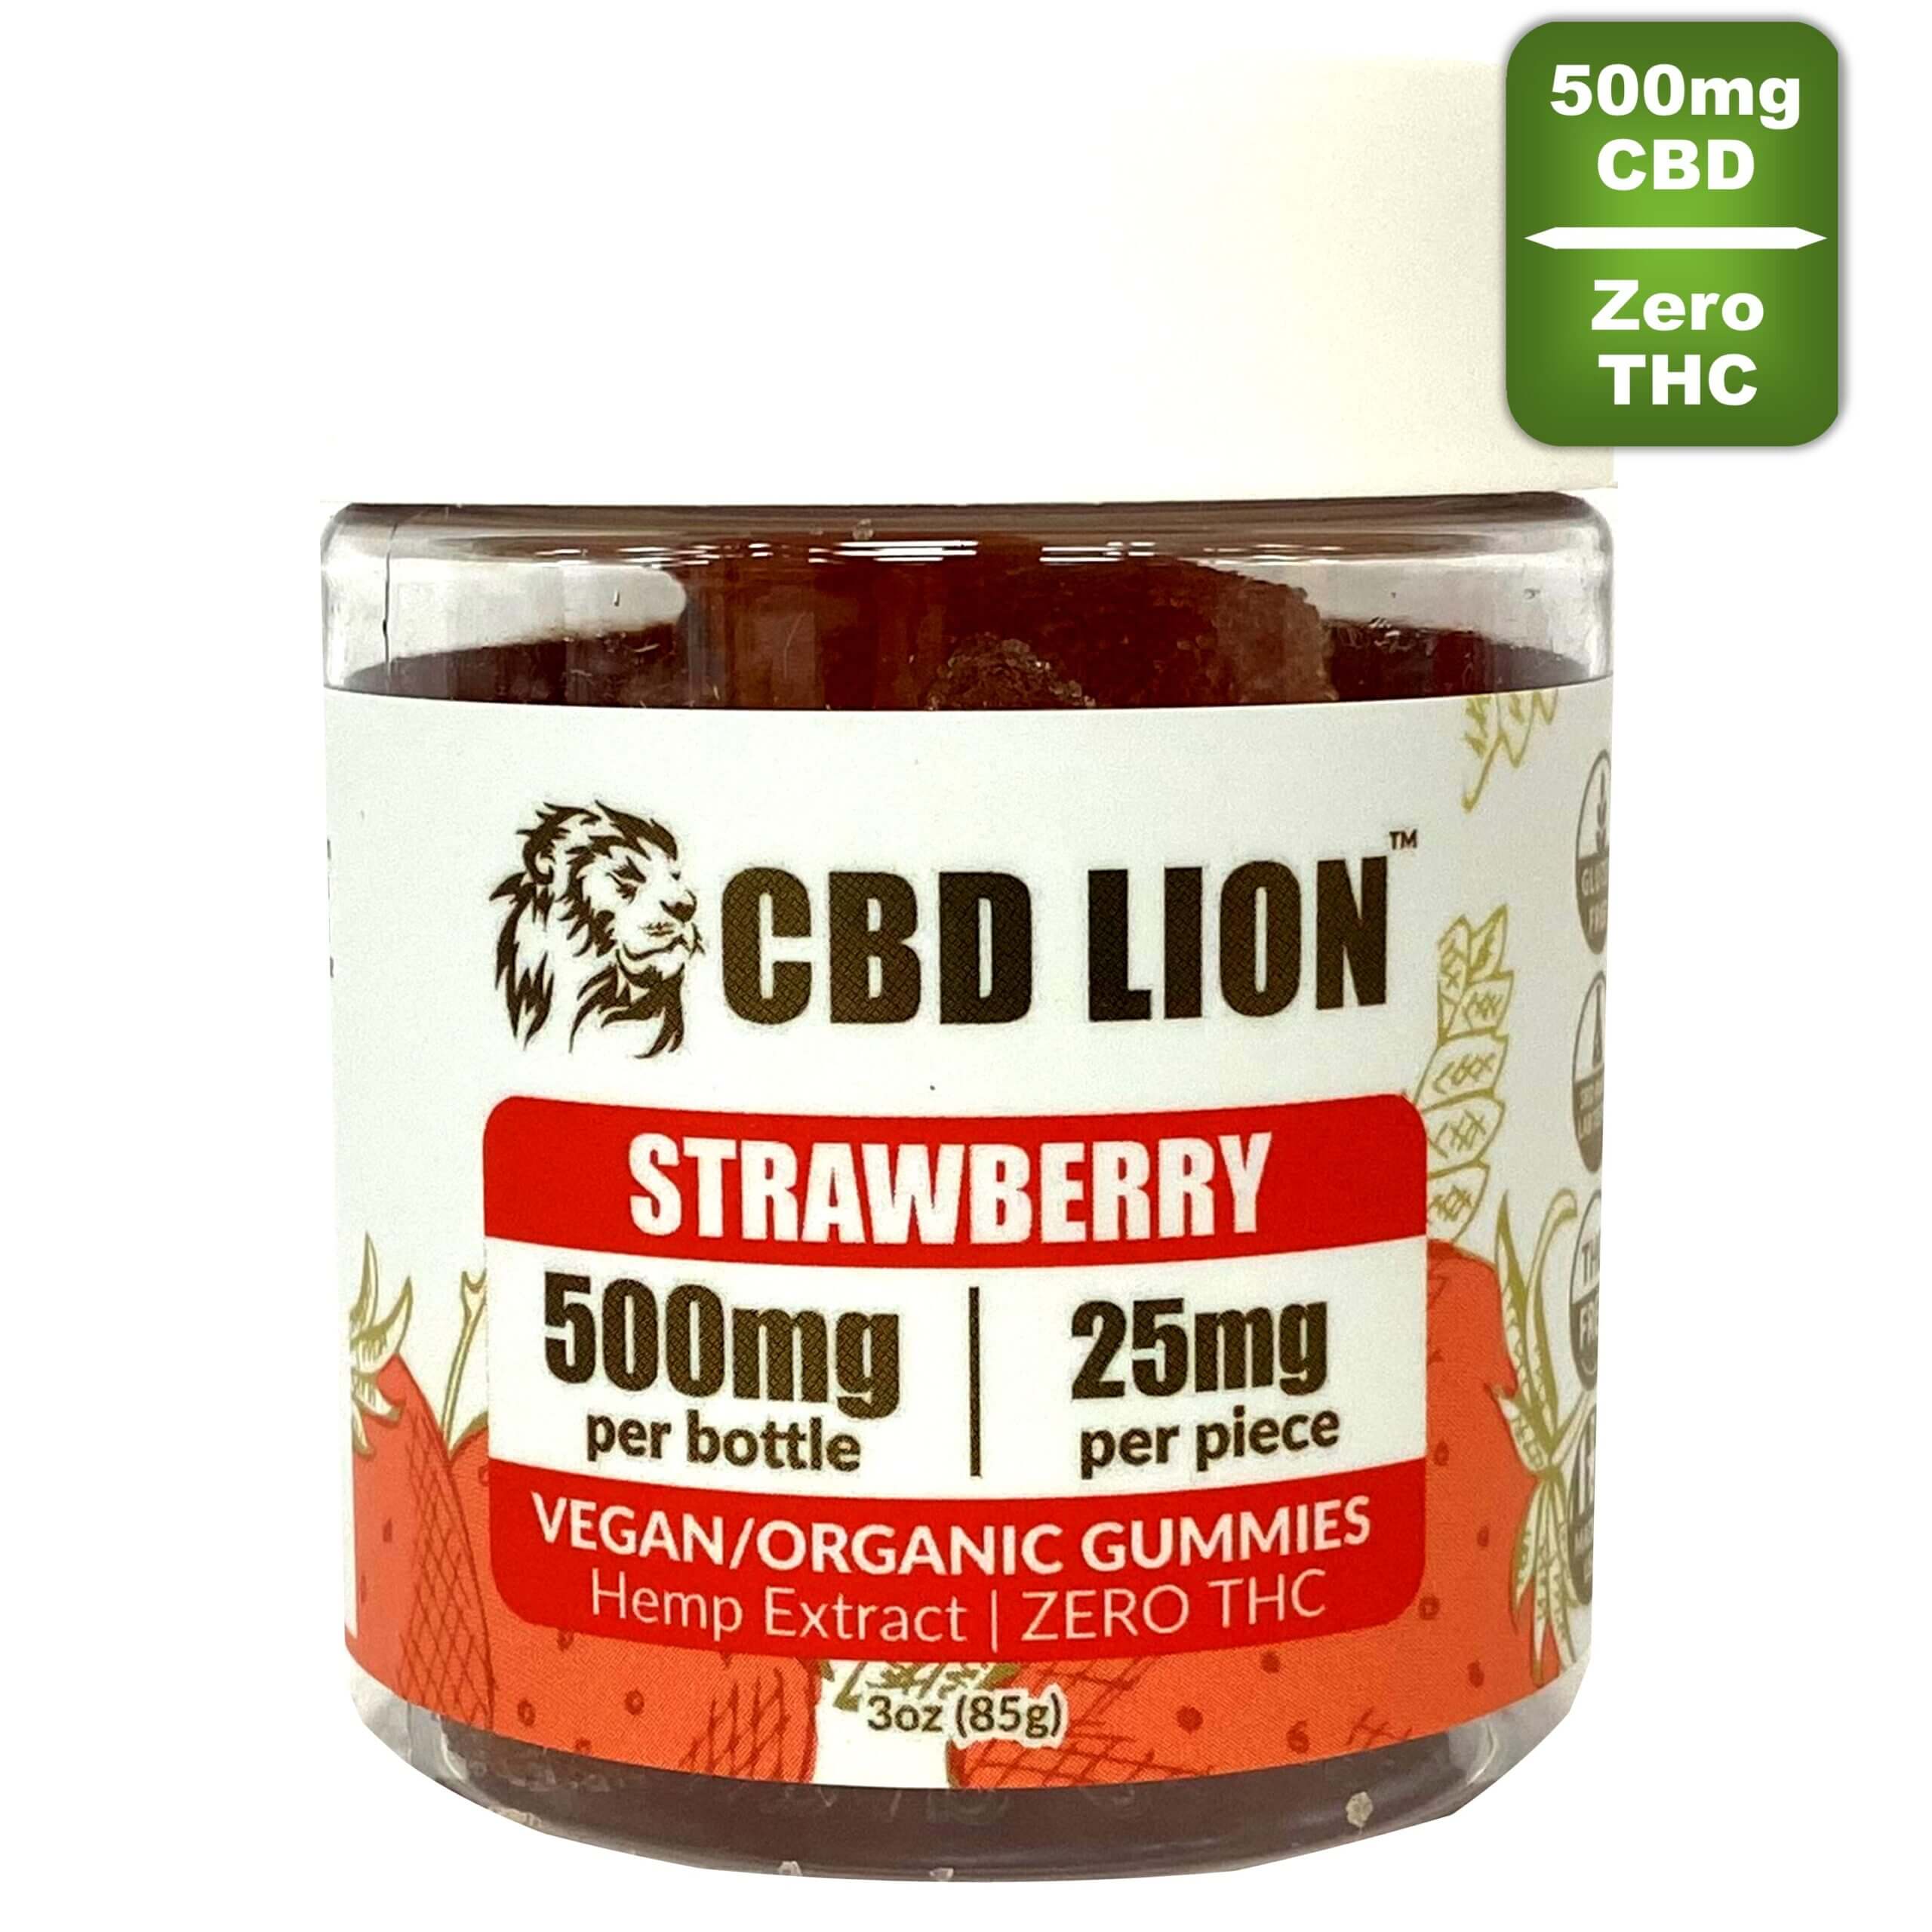 cbd lion - strawberry CBD Gummies - 500mg - broad spectrum